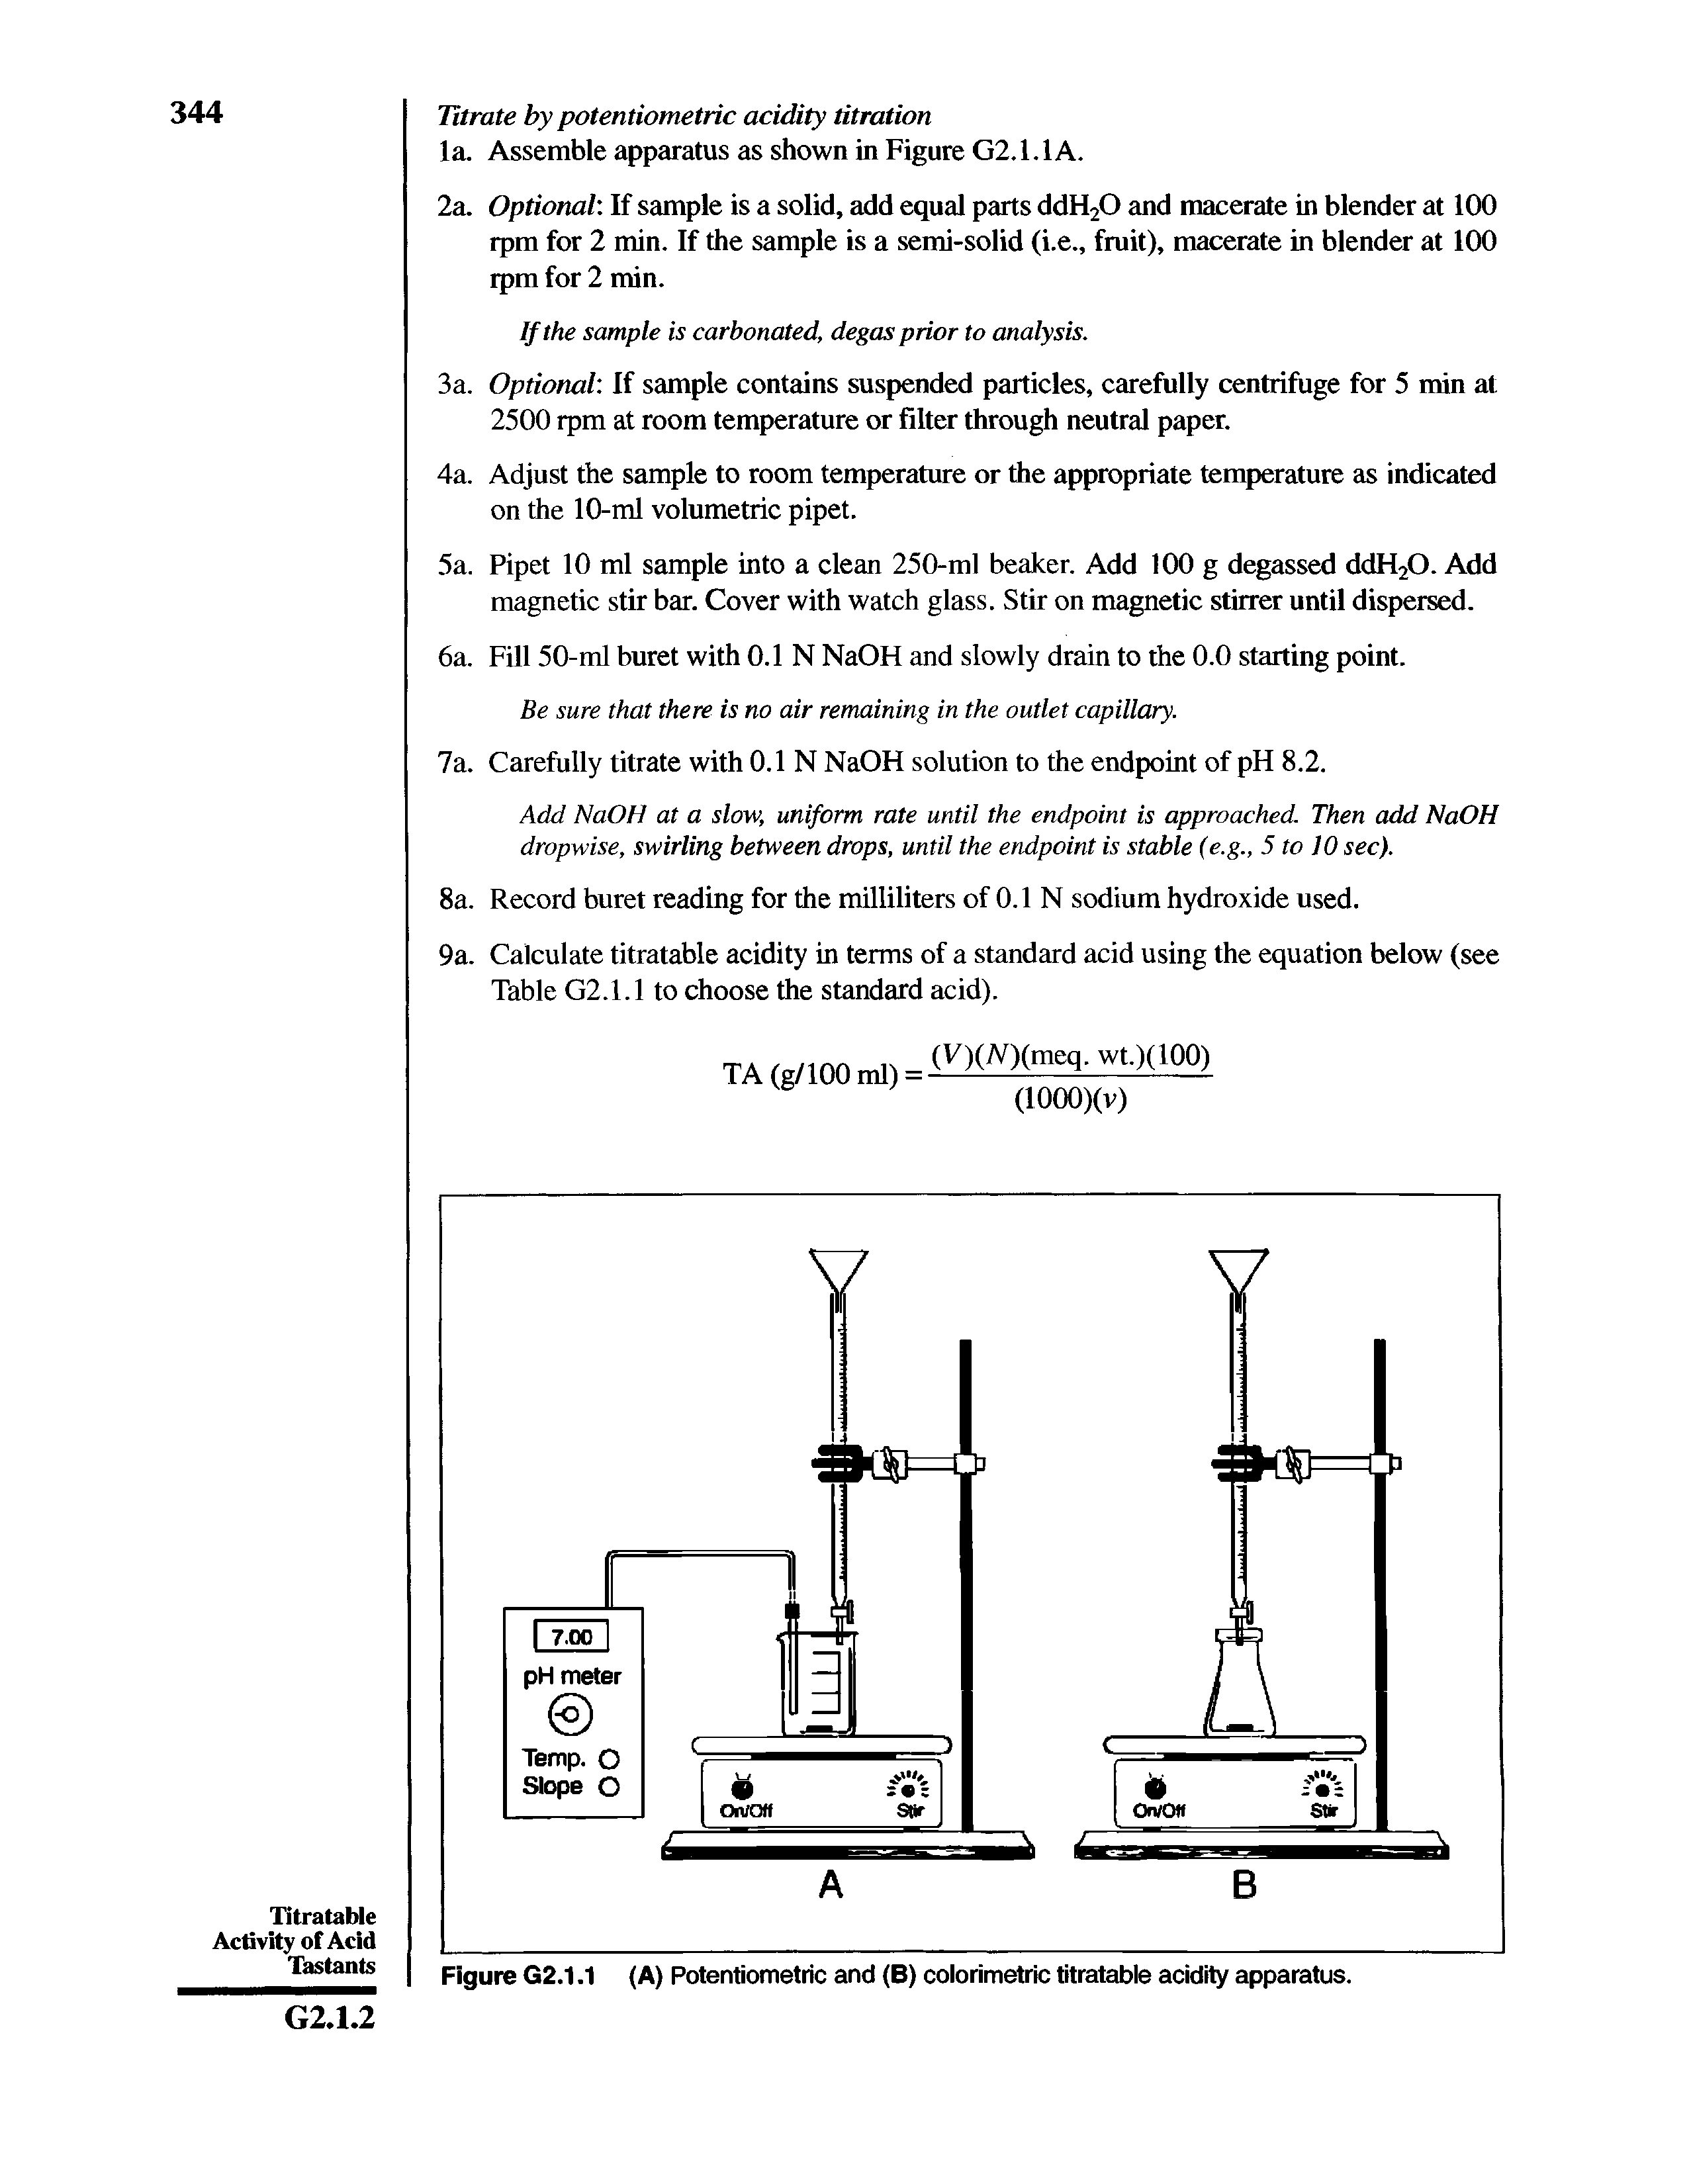 Figure G2.1.1 (A) Potentiometric and (B) colorimetric titratable acidity apparatus.